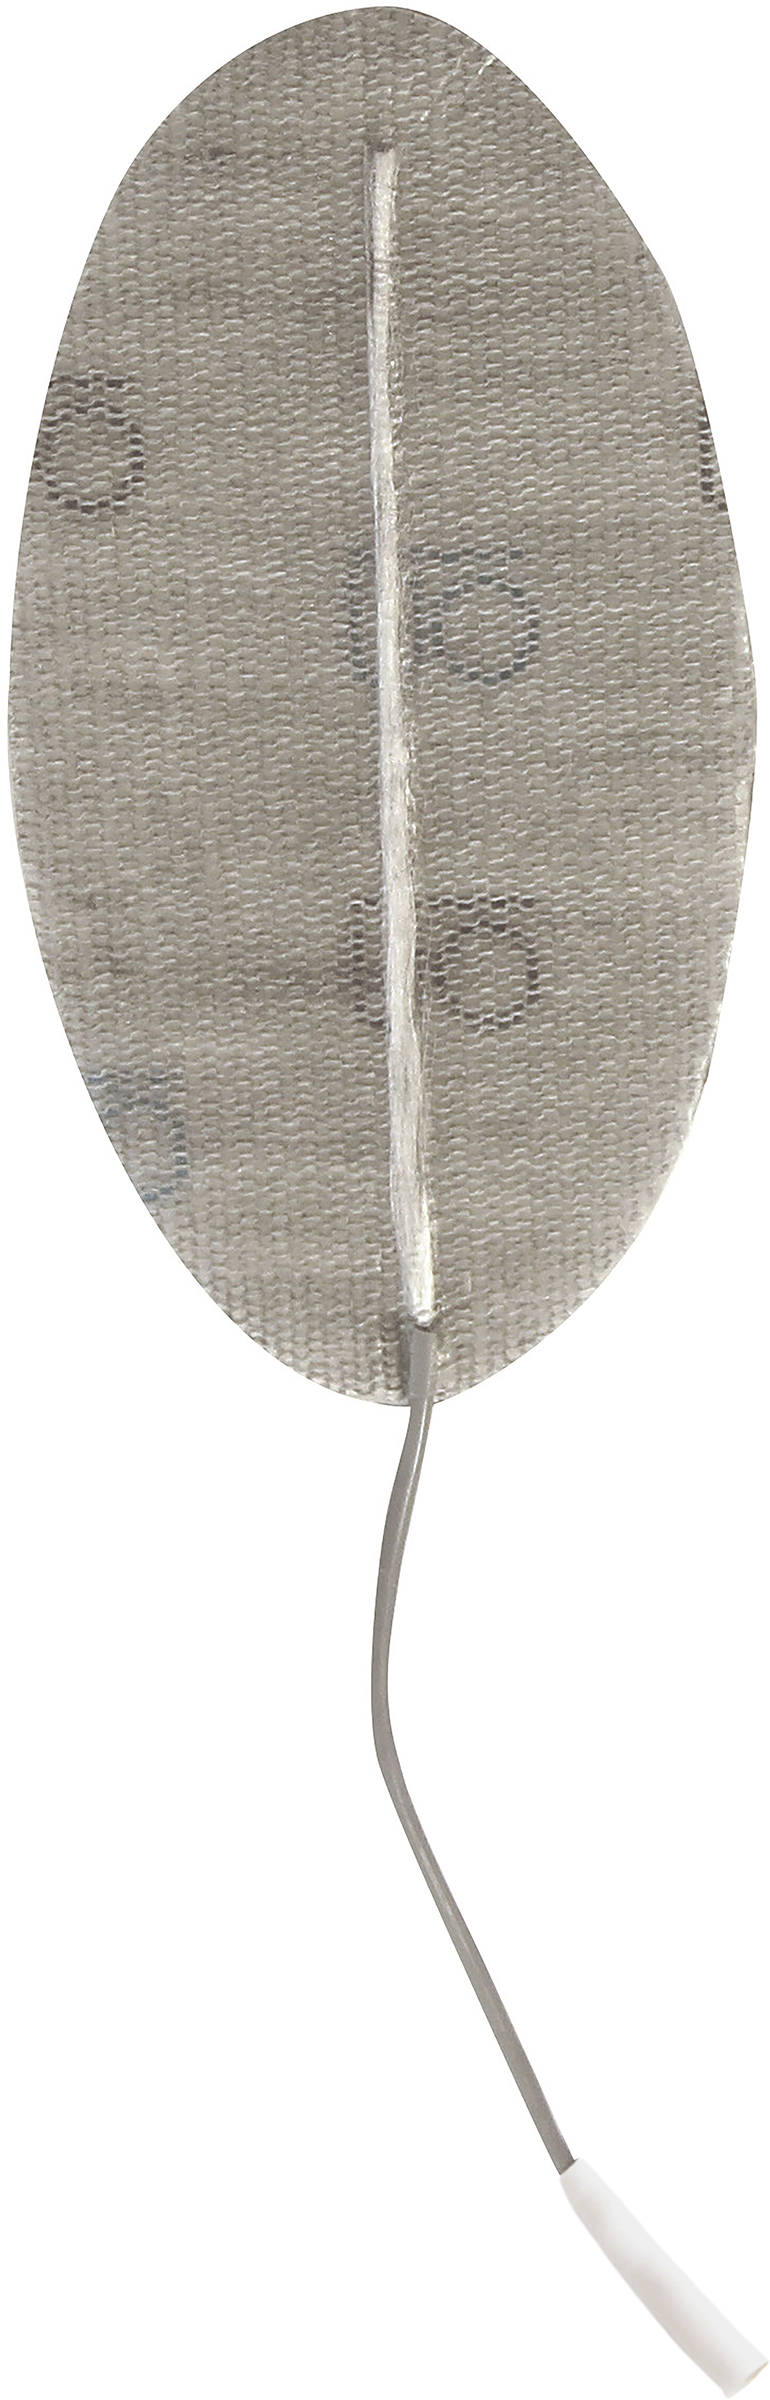 Cefar Dura-Stick Premium självhäftande elektroder oval 5 x 10 cm 4 st